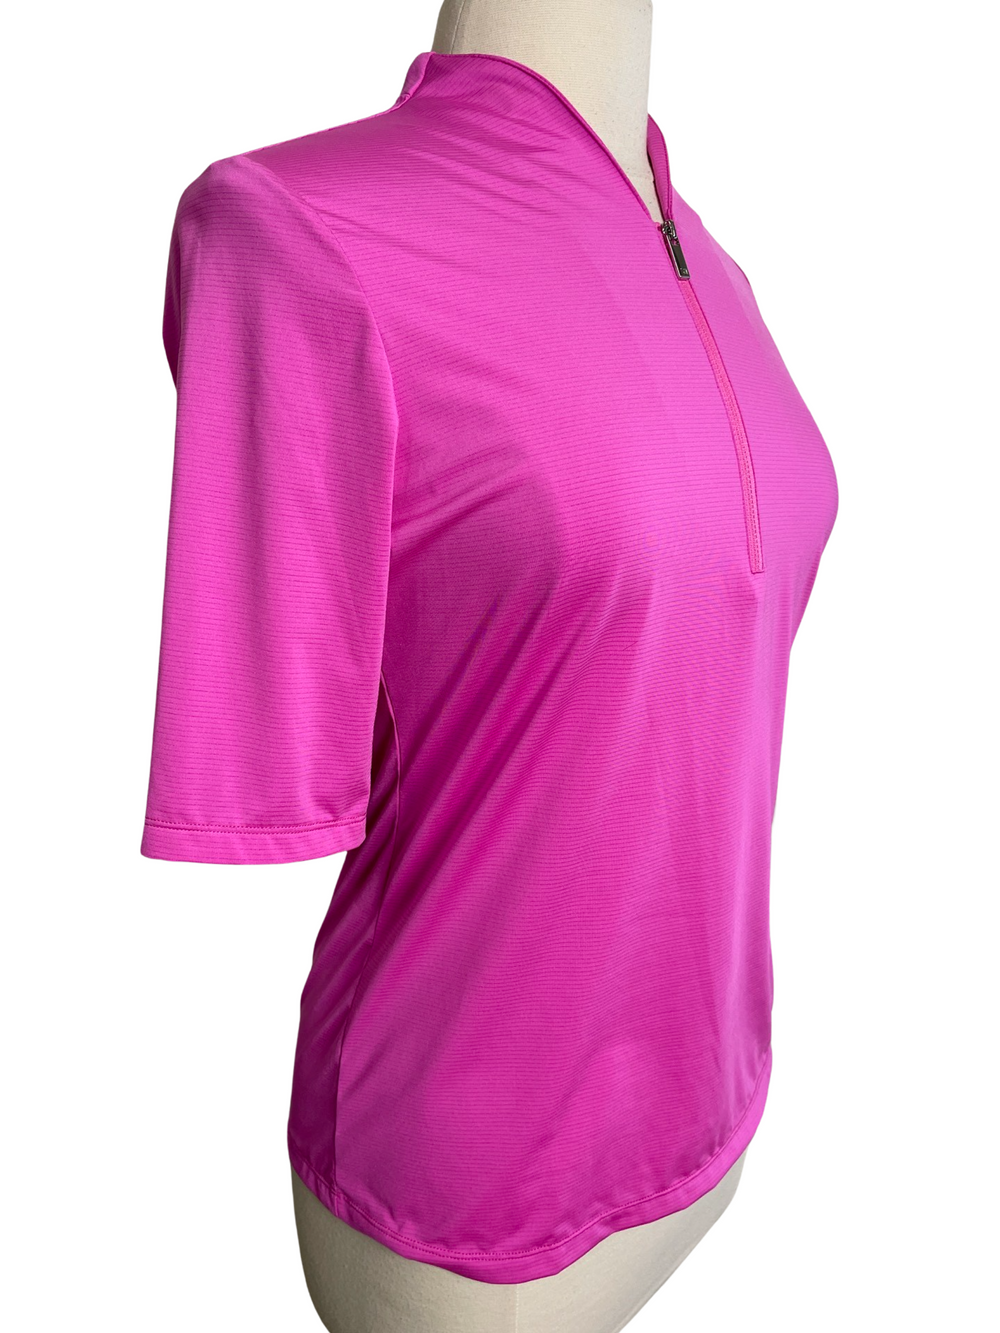 Tail 3/4 Sleeve Hot Pink Top- Medium - Skorzie